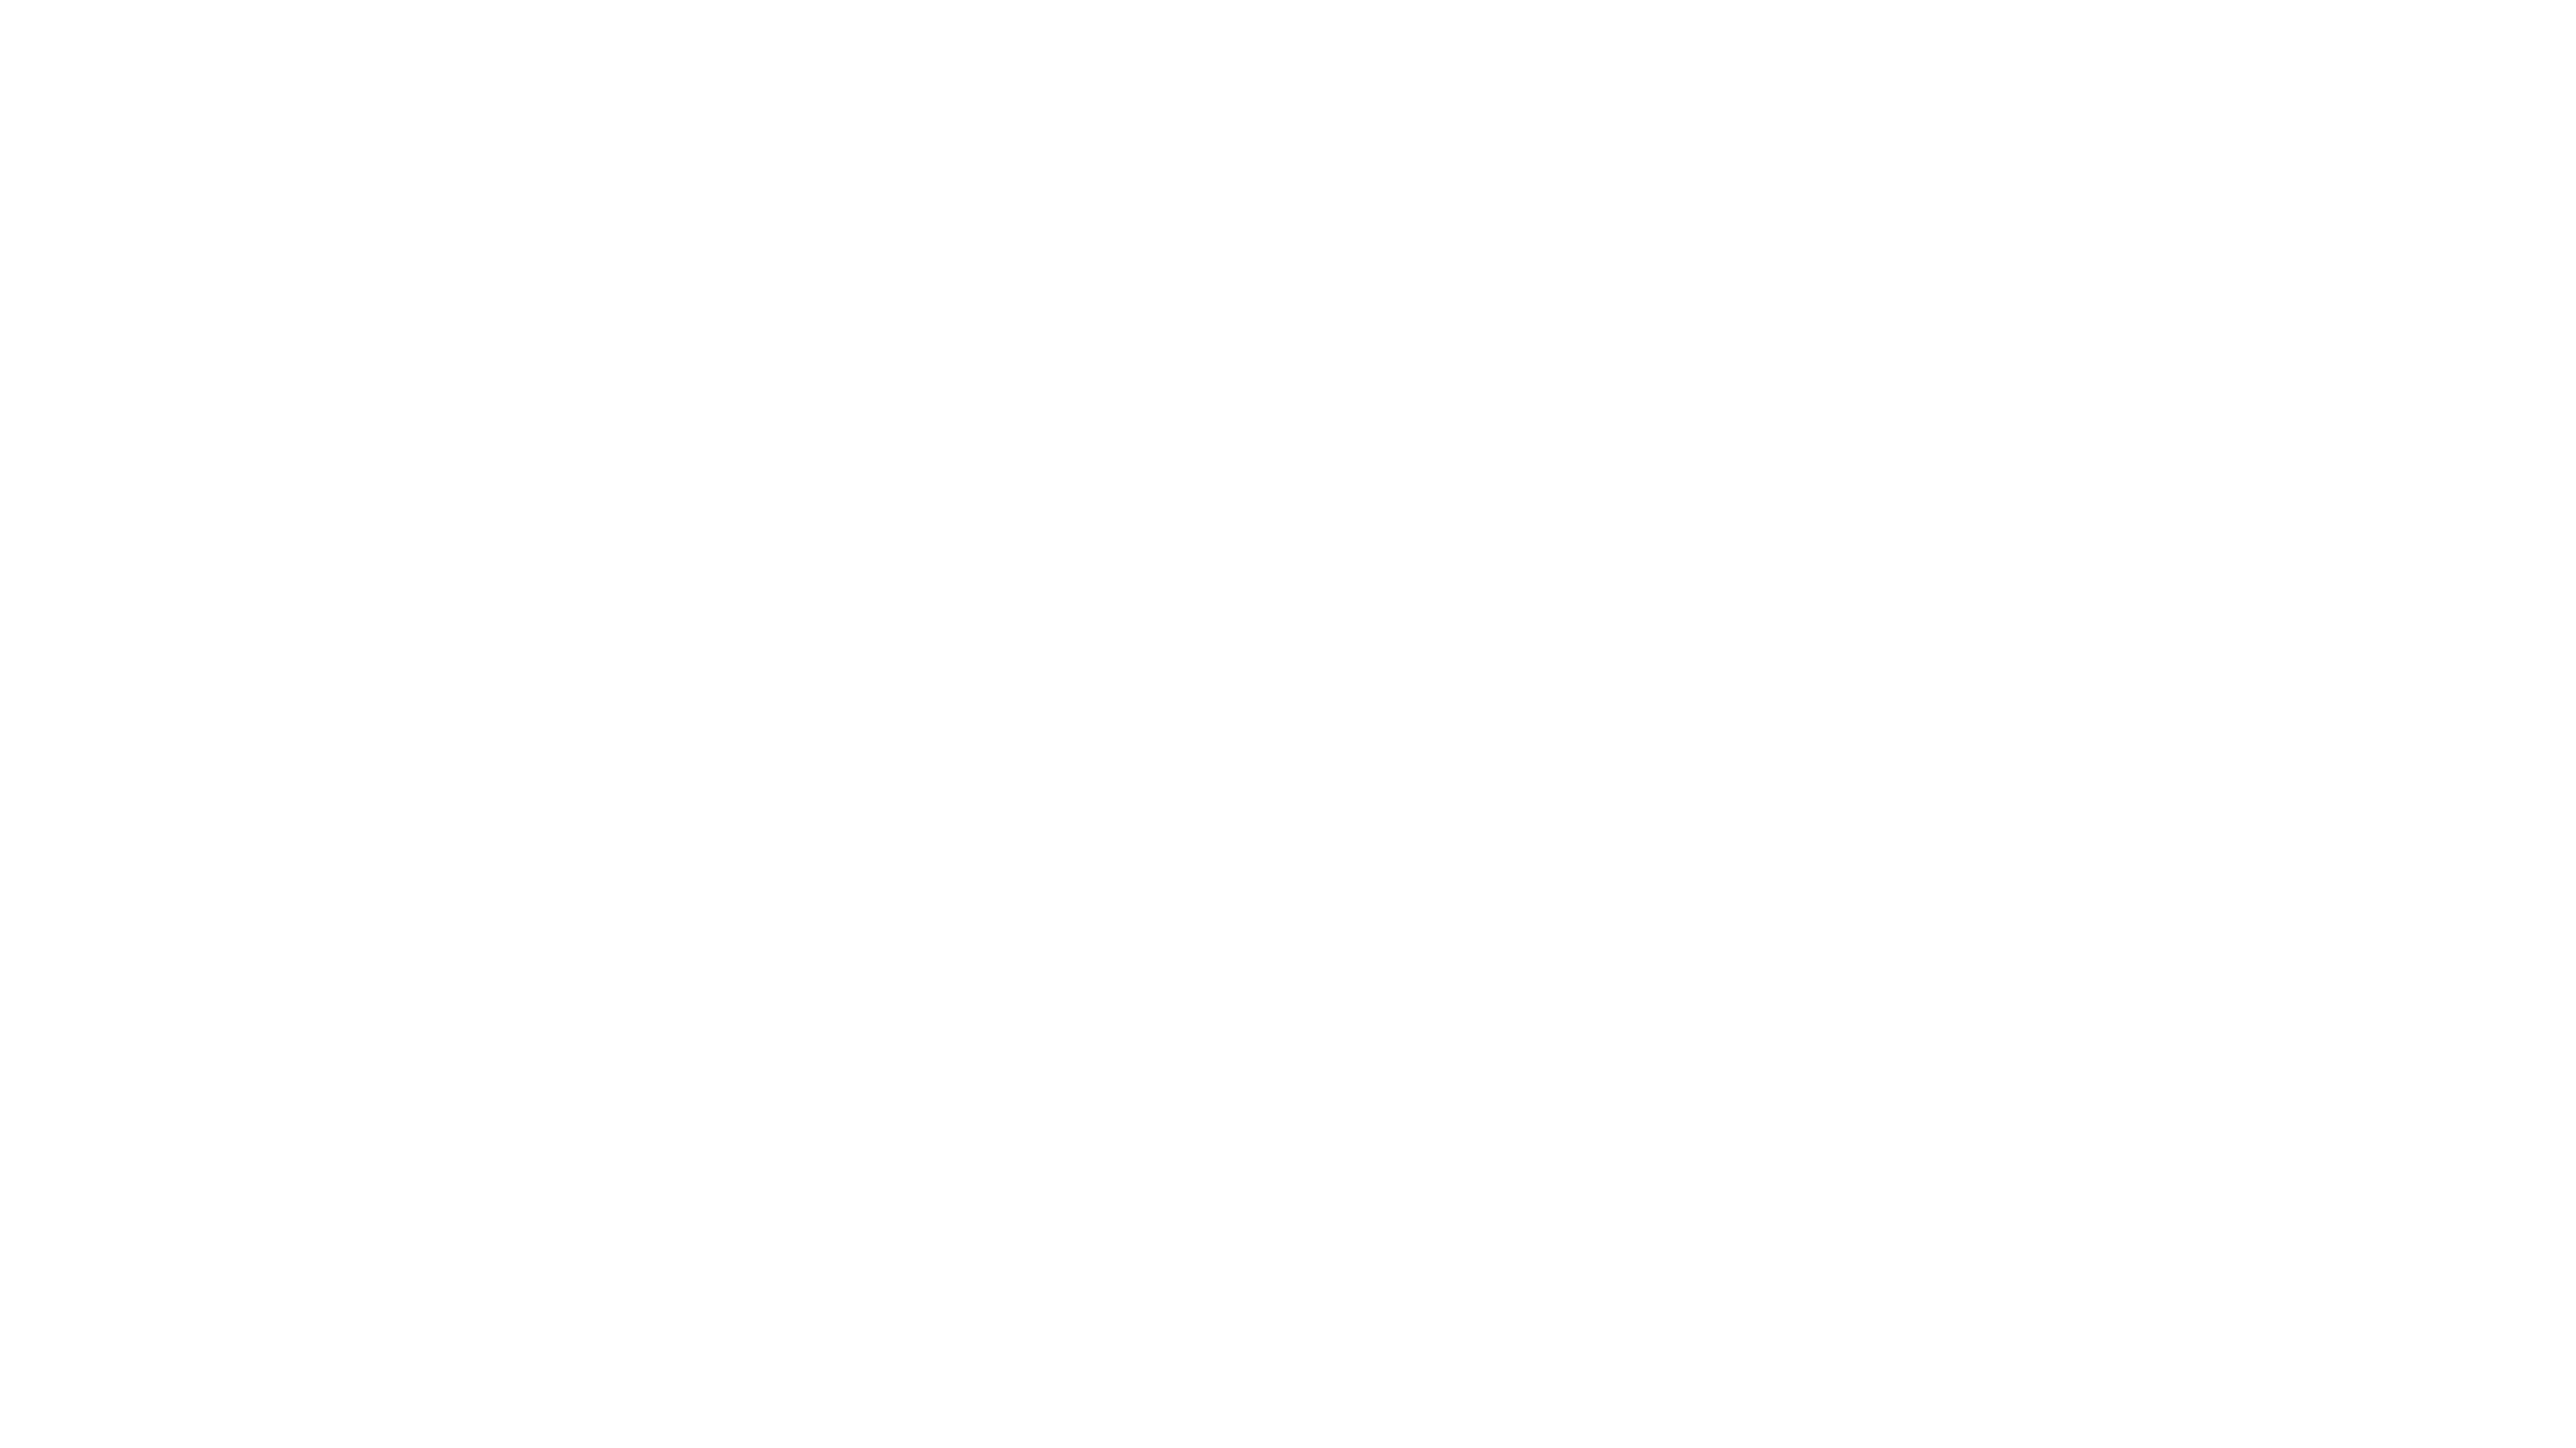 Levy Sponsor Logo for Navy Pier Expierience Gala